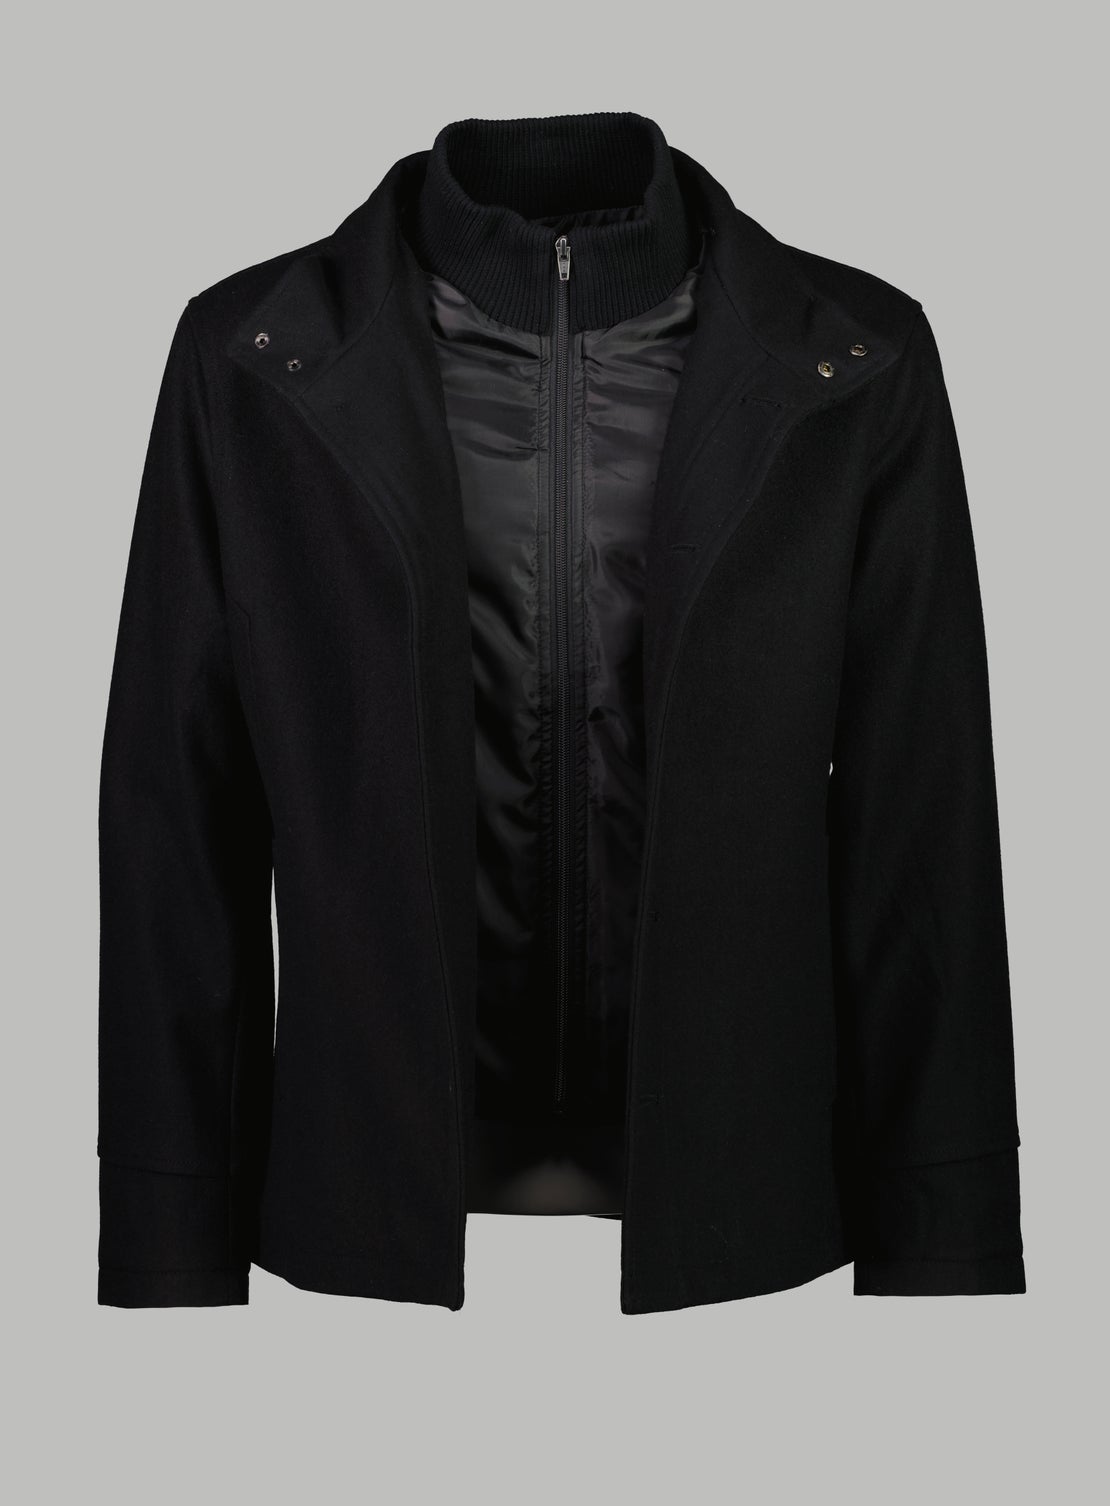 Mansfield Black Coat